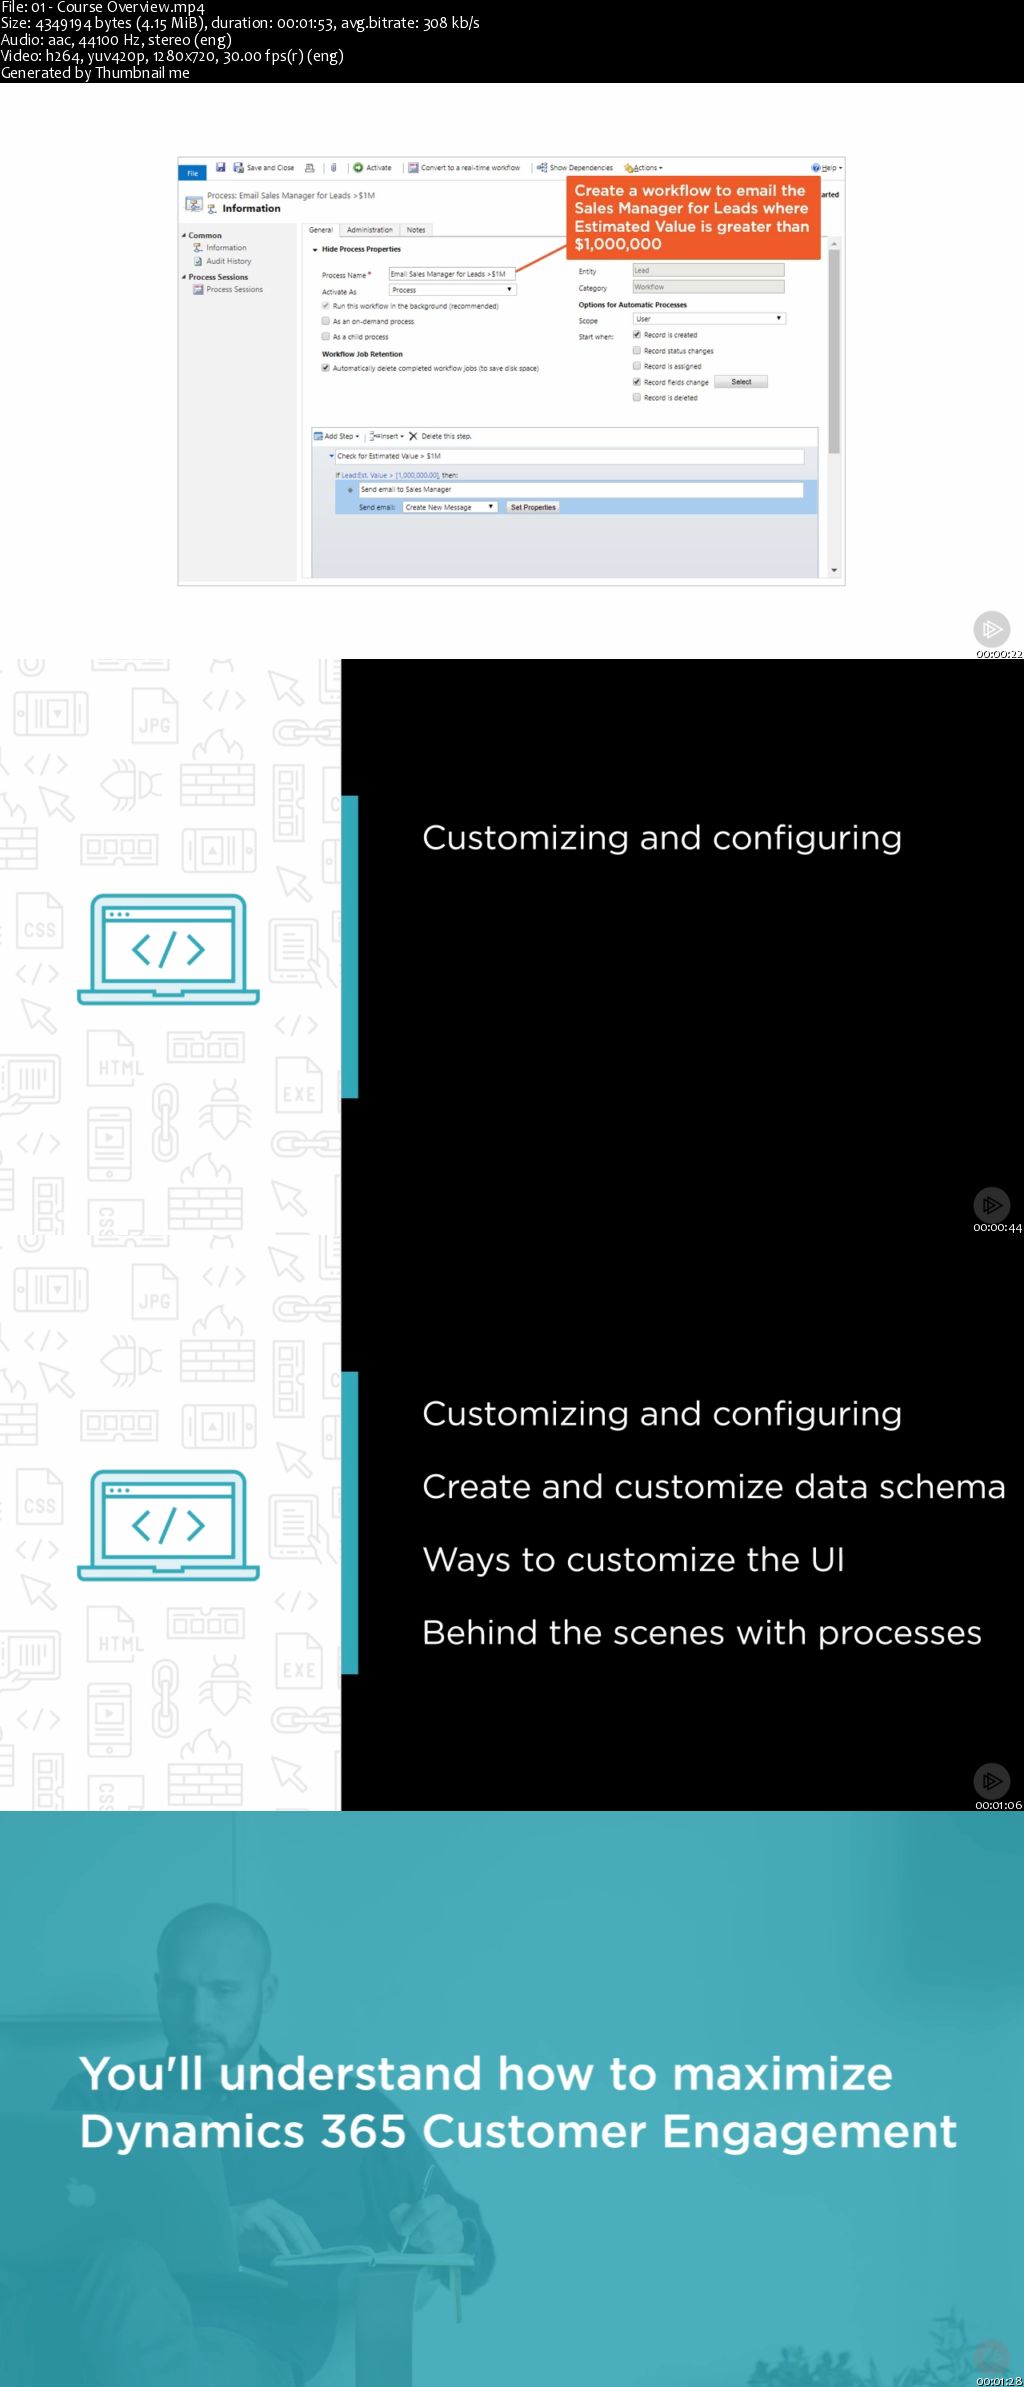 Microsoft Dynamics 365 Customer Engagement (CRM): Customization and Configuration